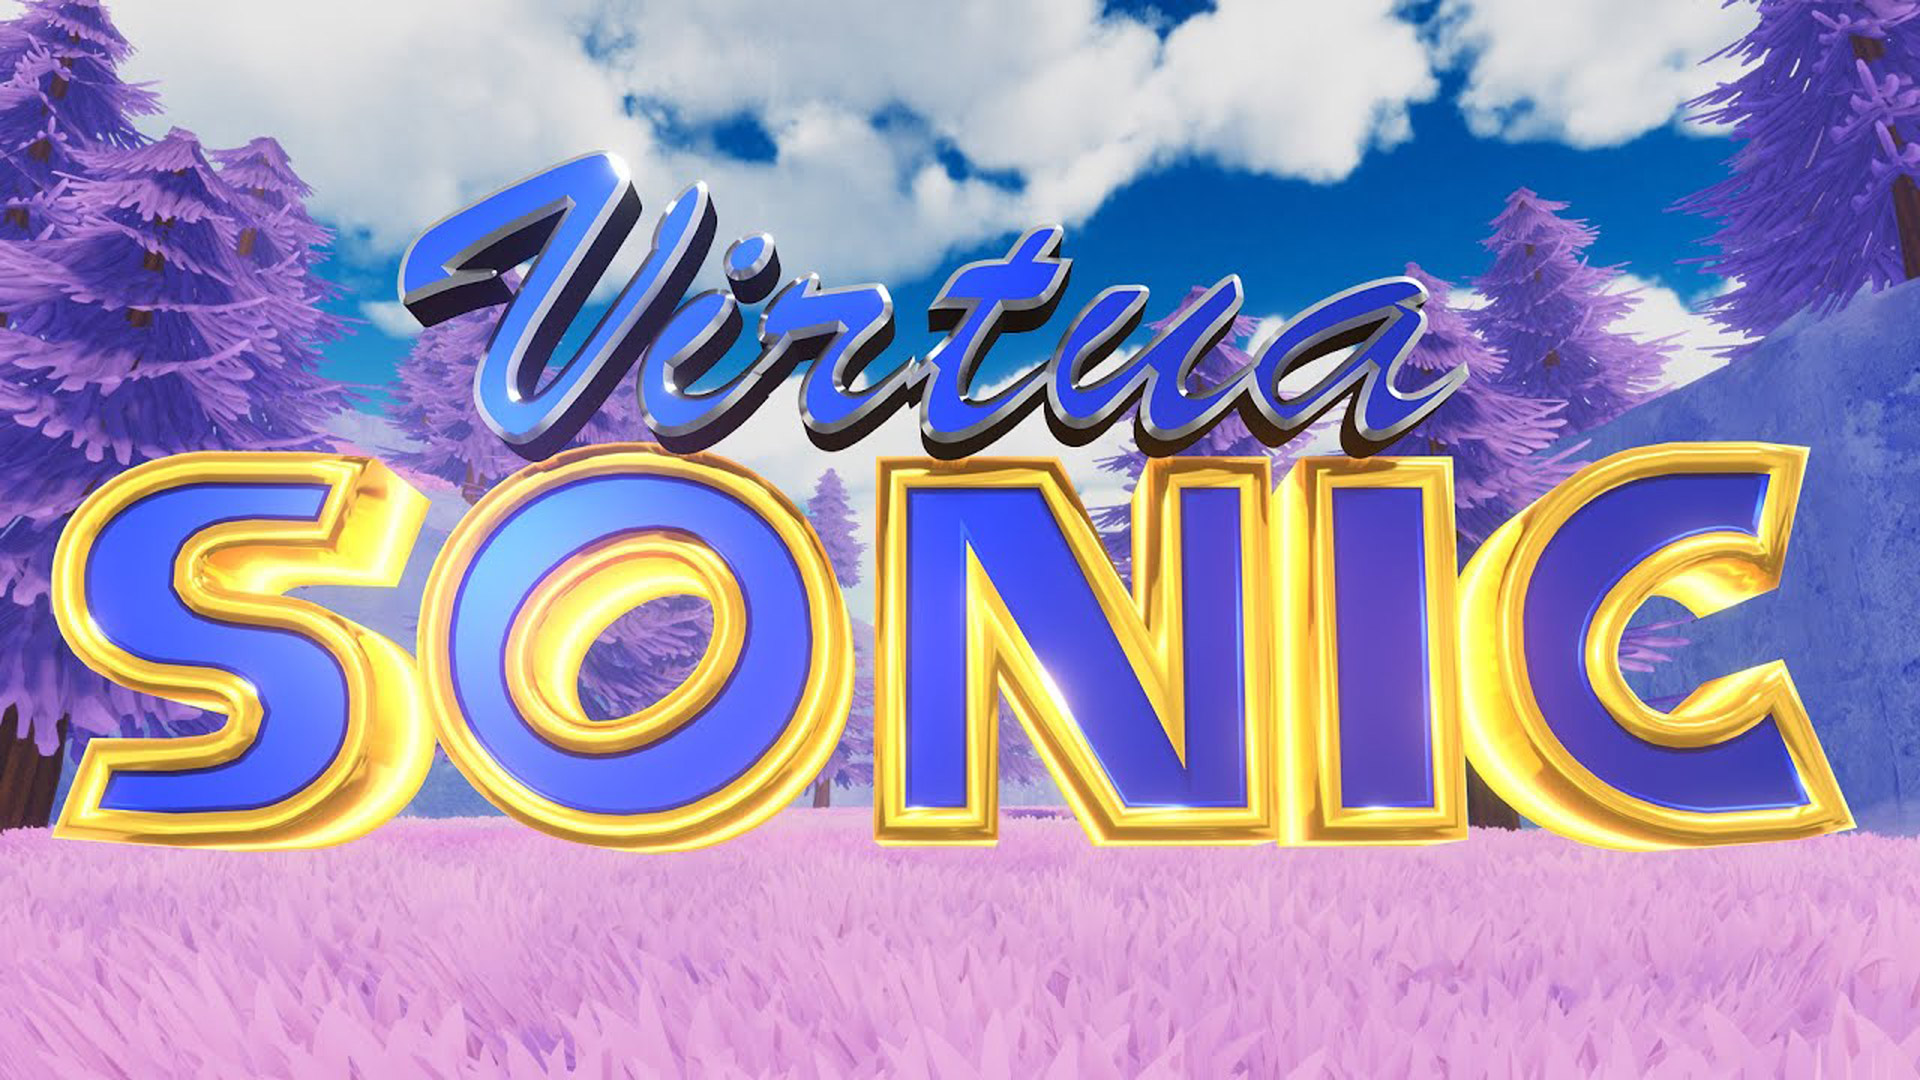 ‘Virtua Sonic’ Fan Experience Brings Sonic the Hedgehog to VR